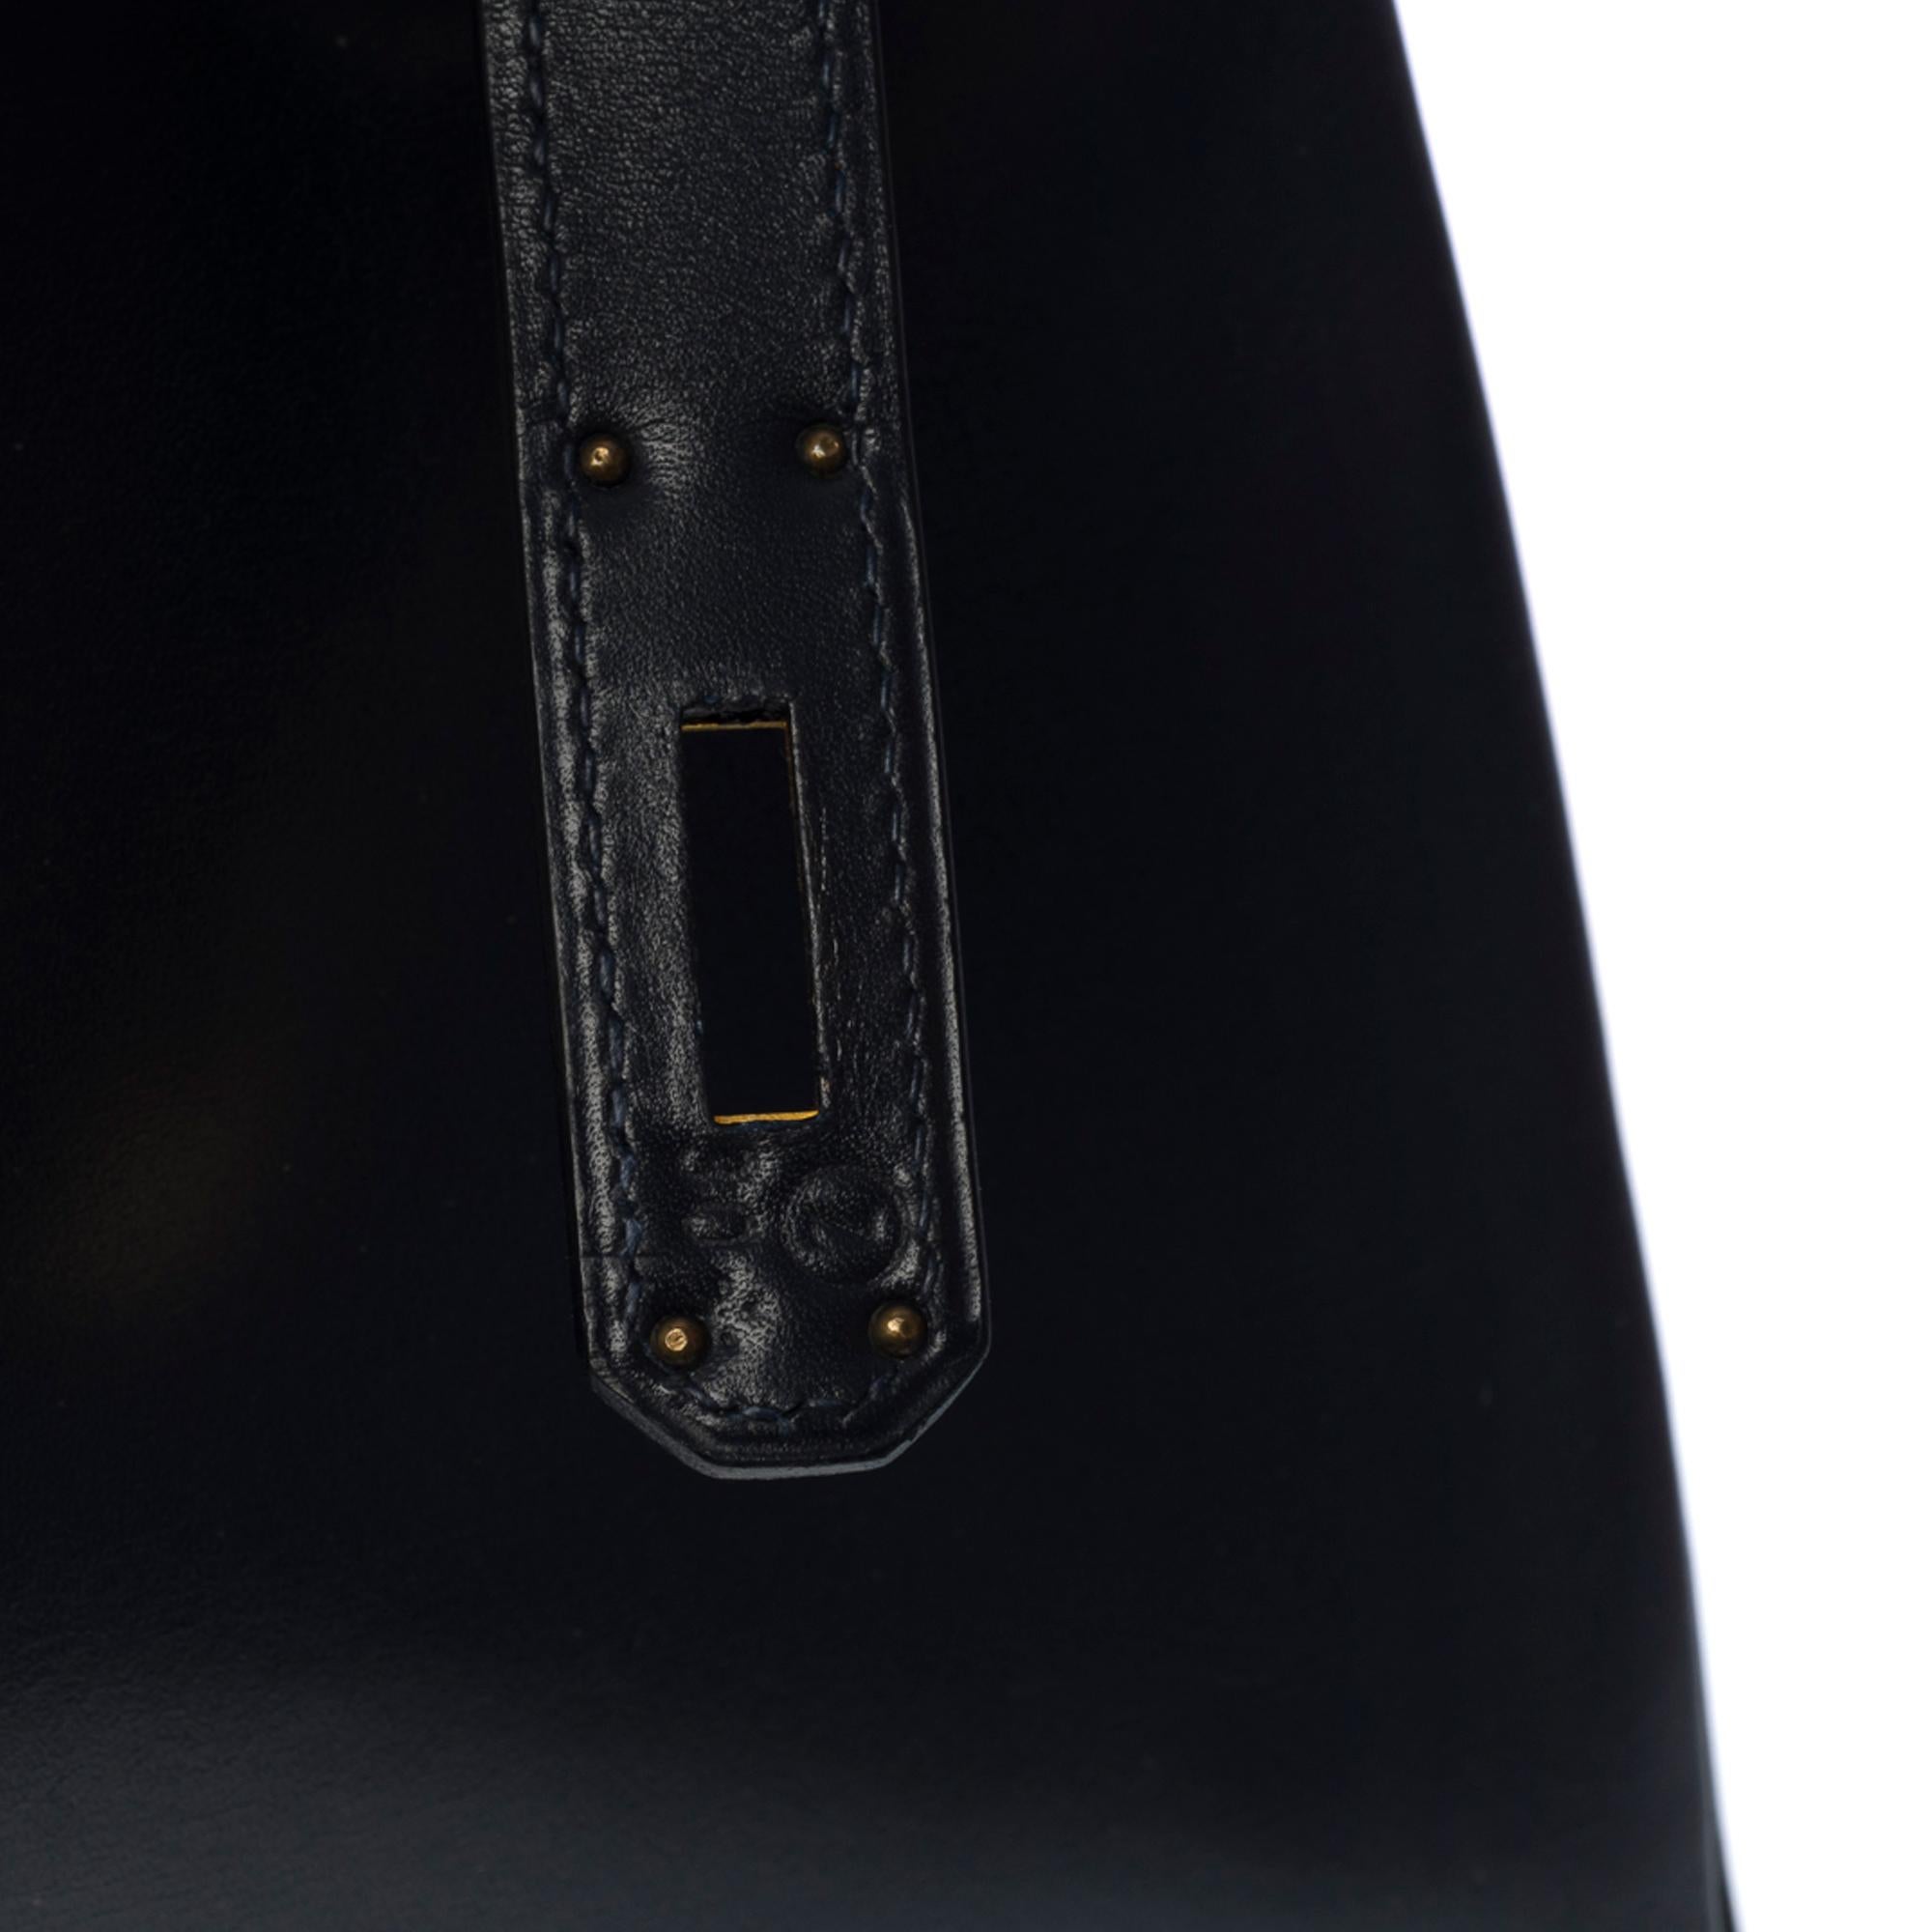 Amazing & Rare Hermès Birkin 35 handbag in Blue indigo box calfskin leather, GHW 2